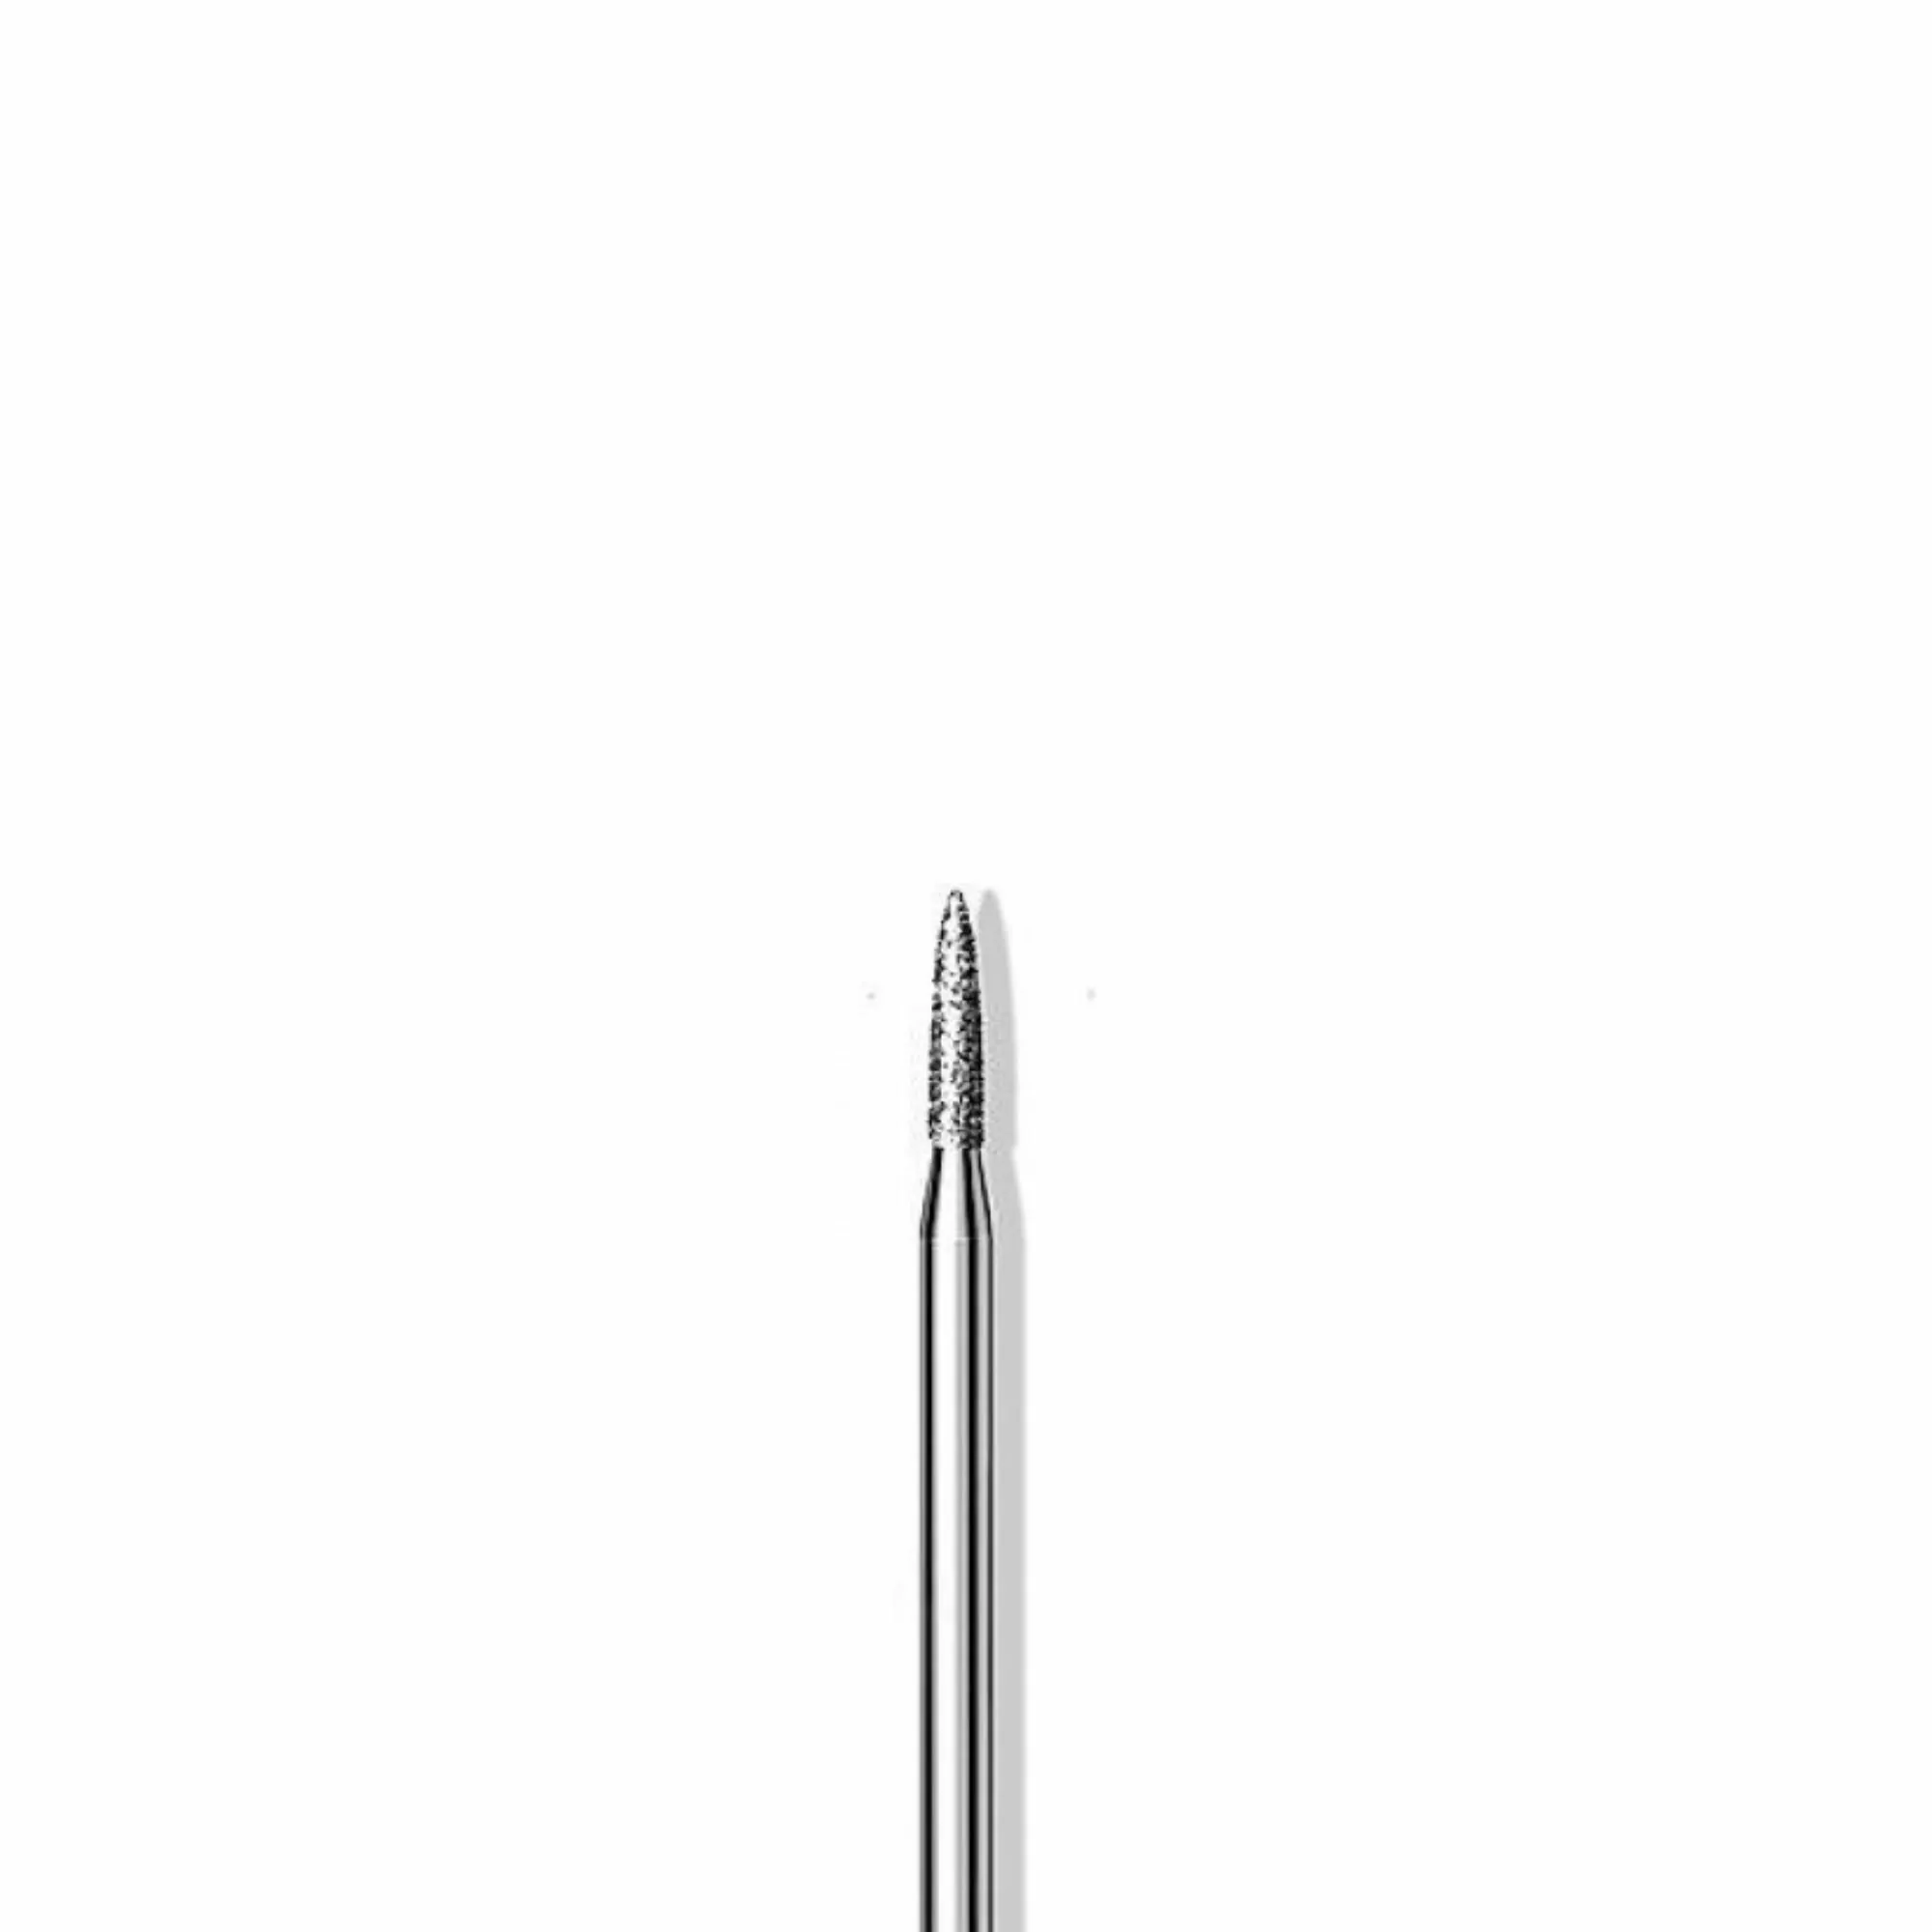 Fraise diamant - Lissage ongles et callosités - 2,5 mm - 863 - Busch